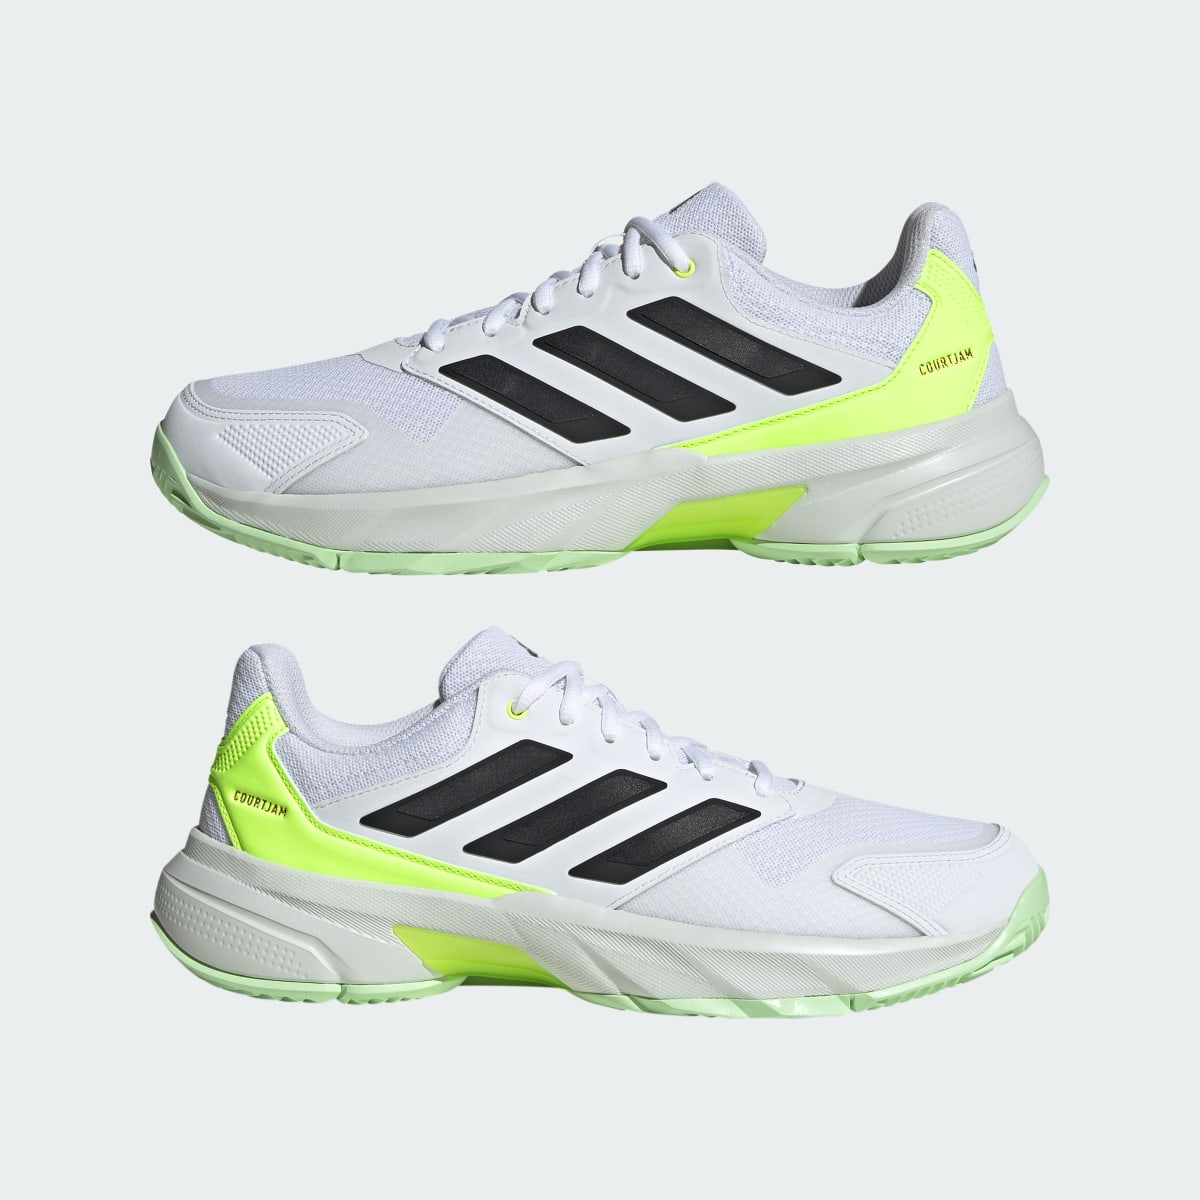 Adidas Chaussure de tennis Courtjam Control 3. 11